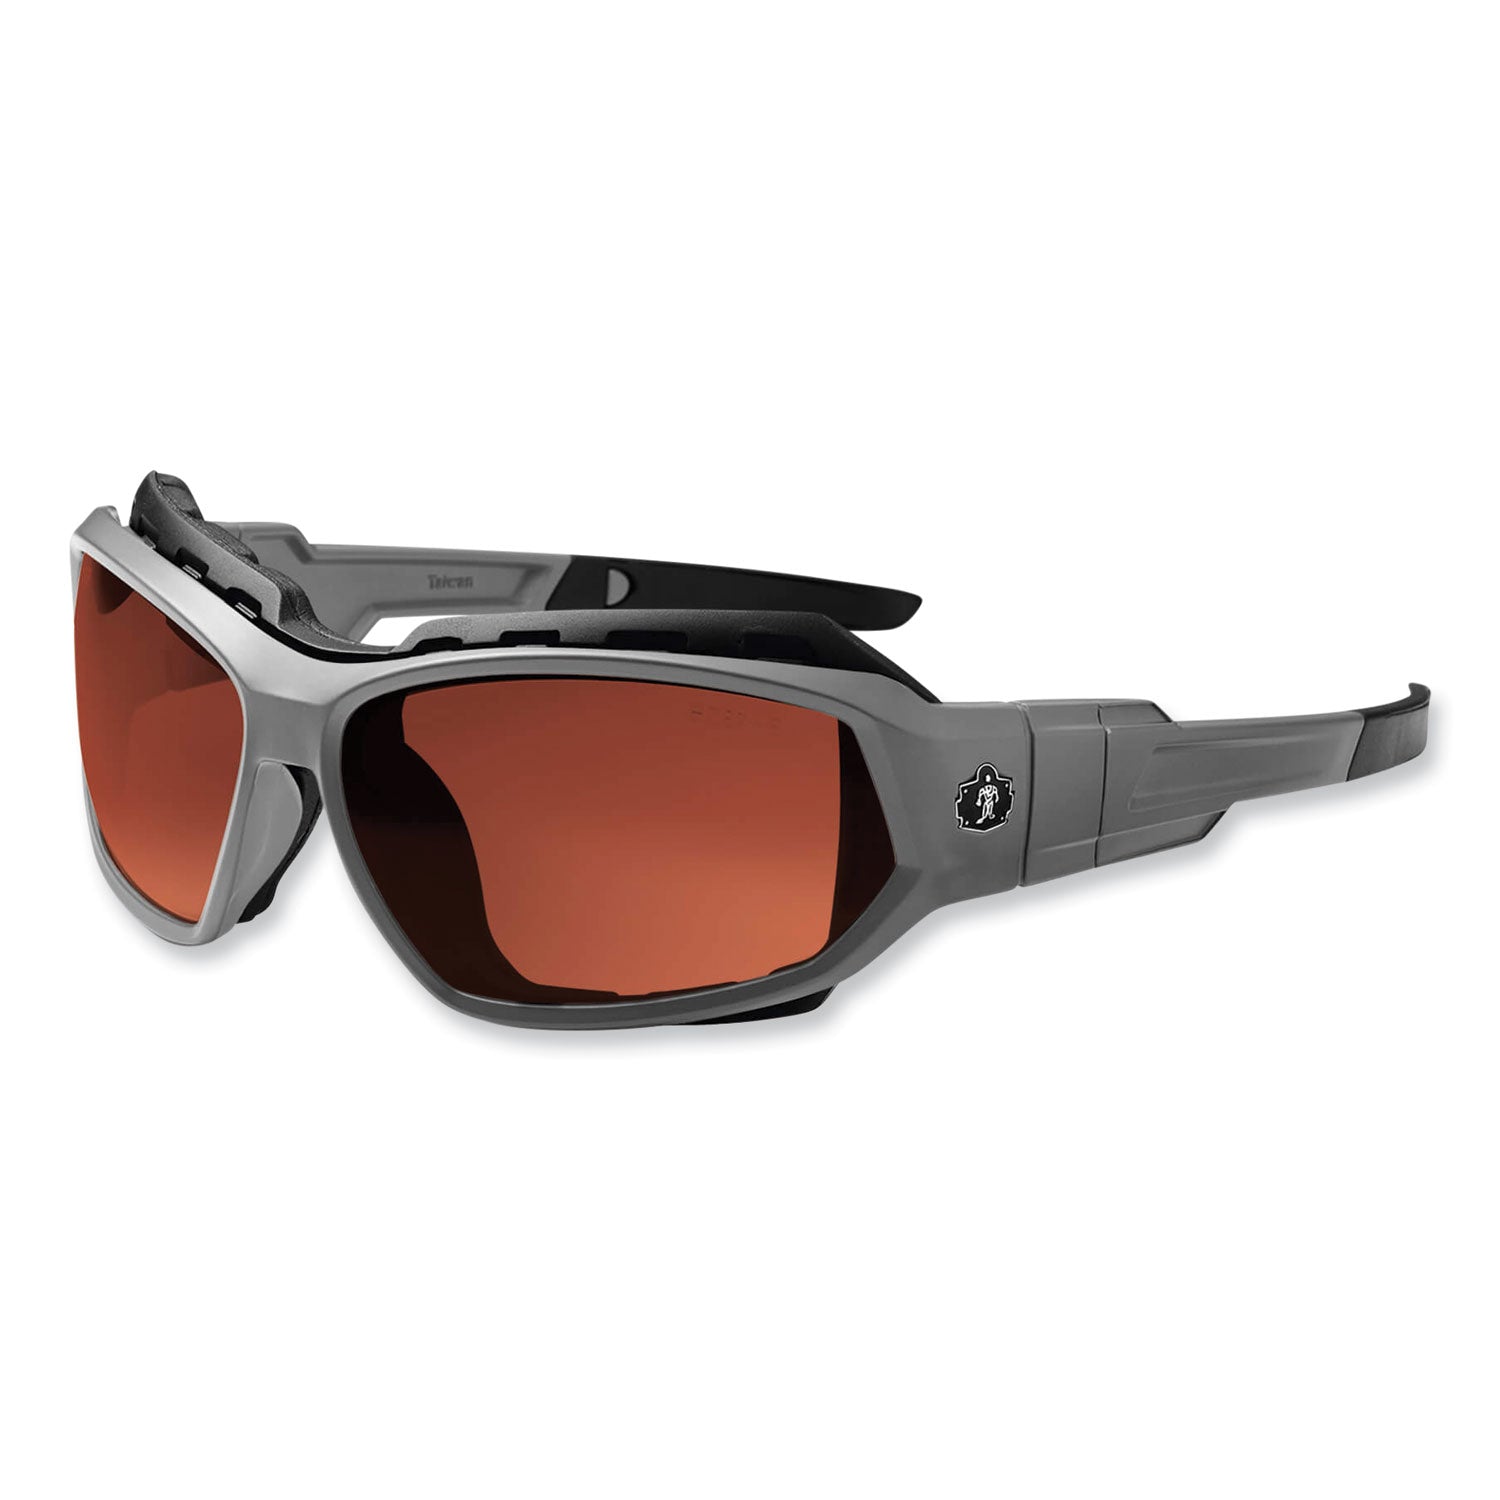 skullerz-loki-safety-glasses-goggles-gray-nylon-impact-frame-polarized-copper-polycarb-lens-ships-in-1-3-business-days_ego56121 - 1